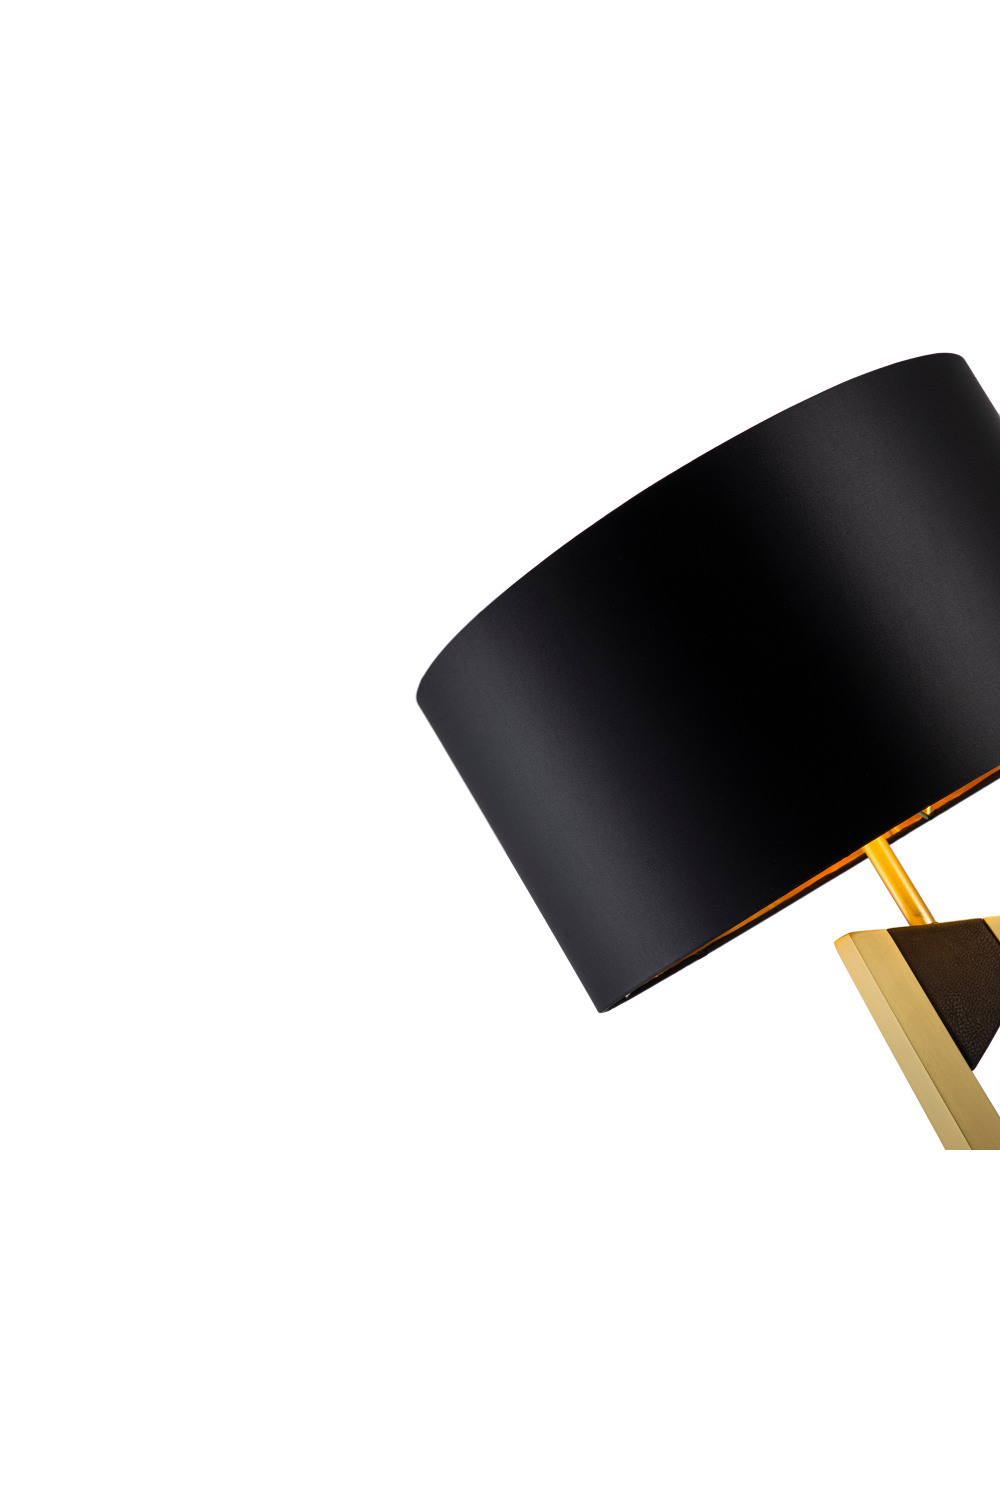 Contemporary Leather Table Lamp | Liang & Eimil Pharo | Oroa.com